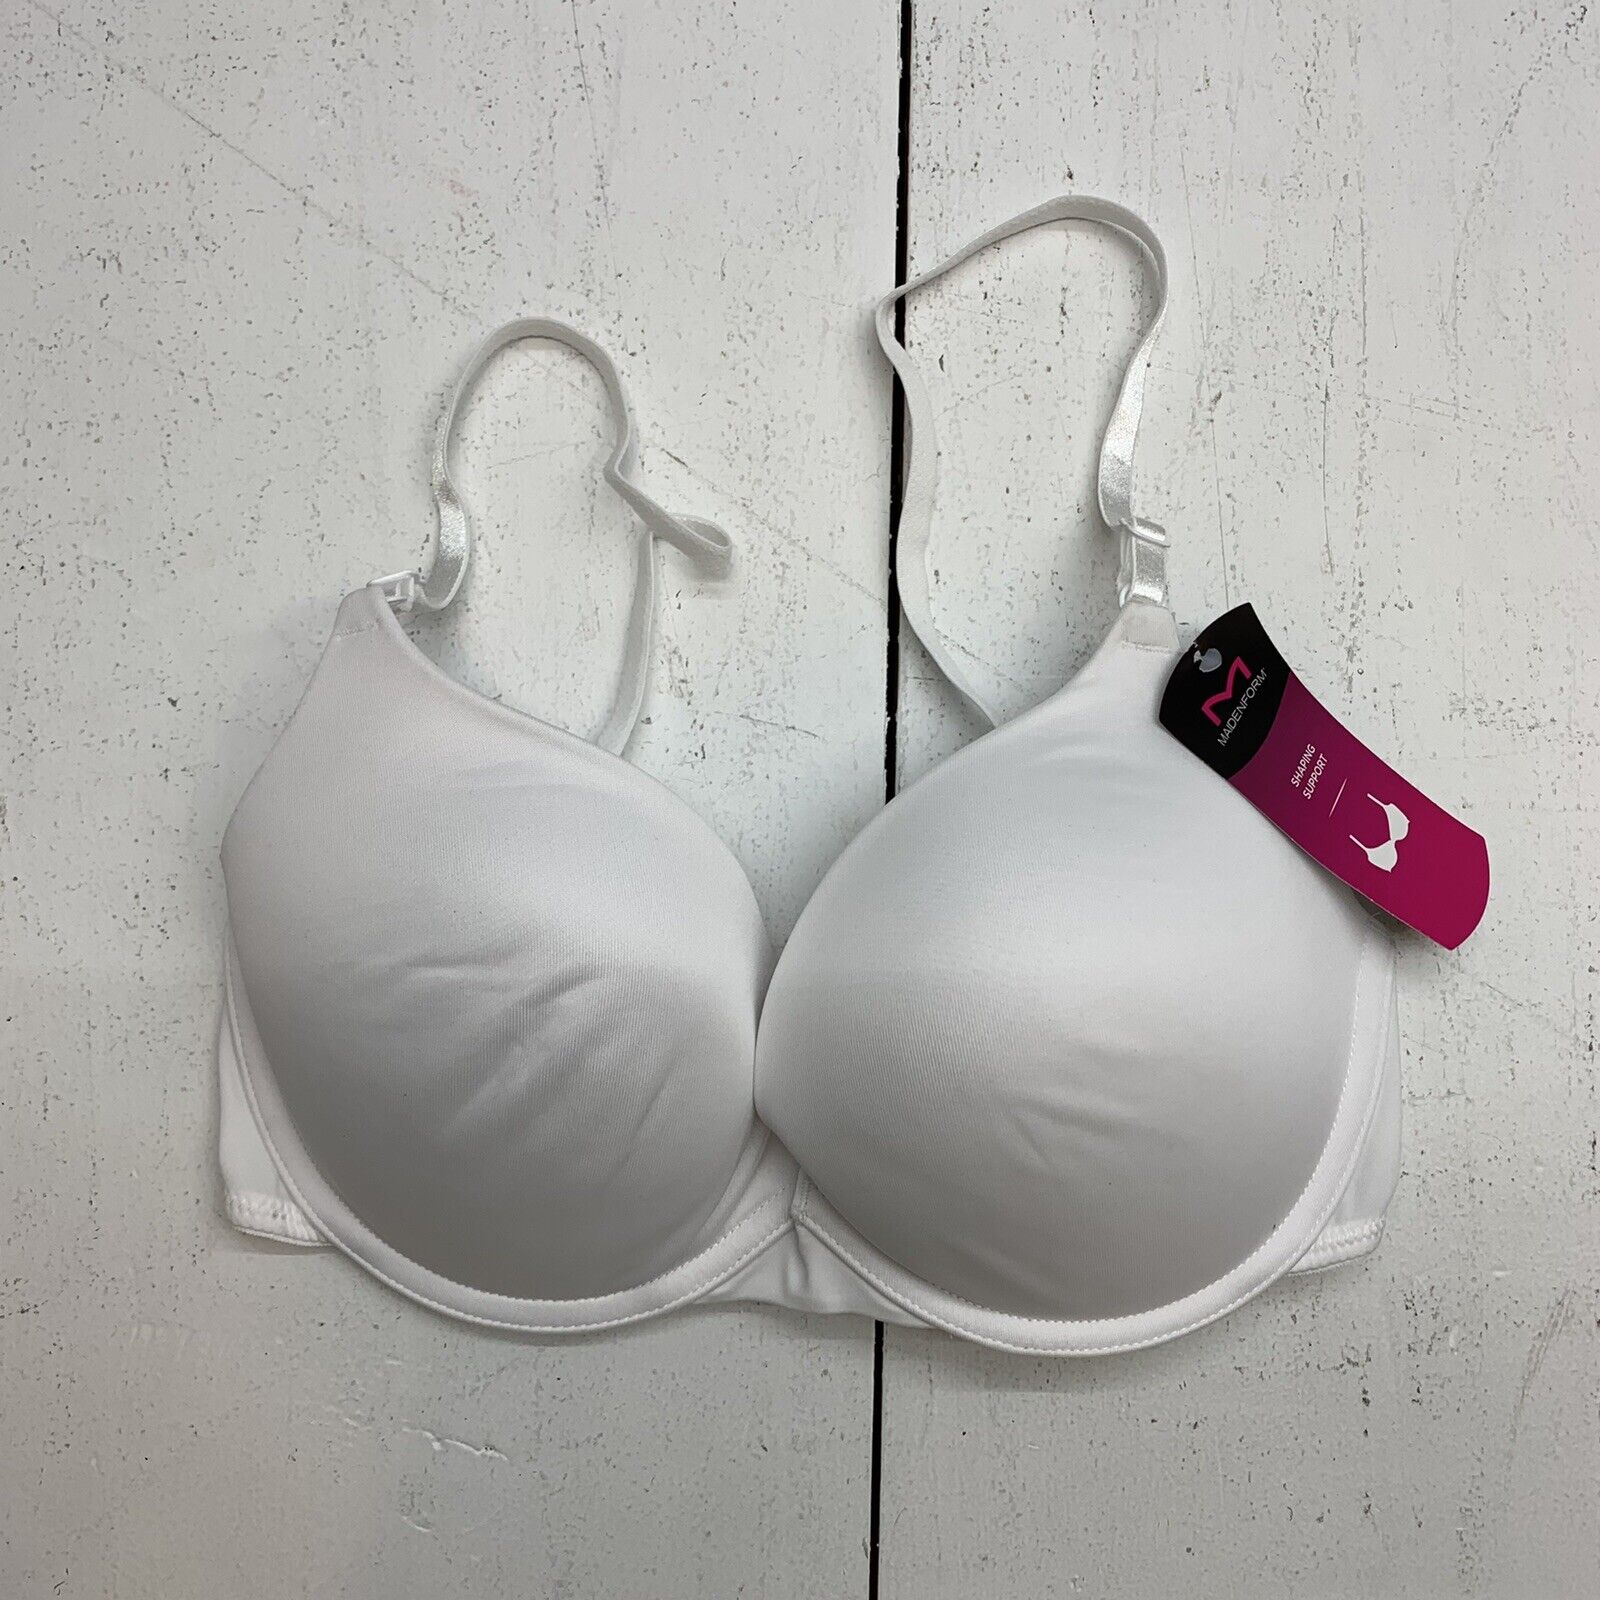 Maidenform White T-Shirt bra womens size 34D - beyond exchange